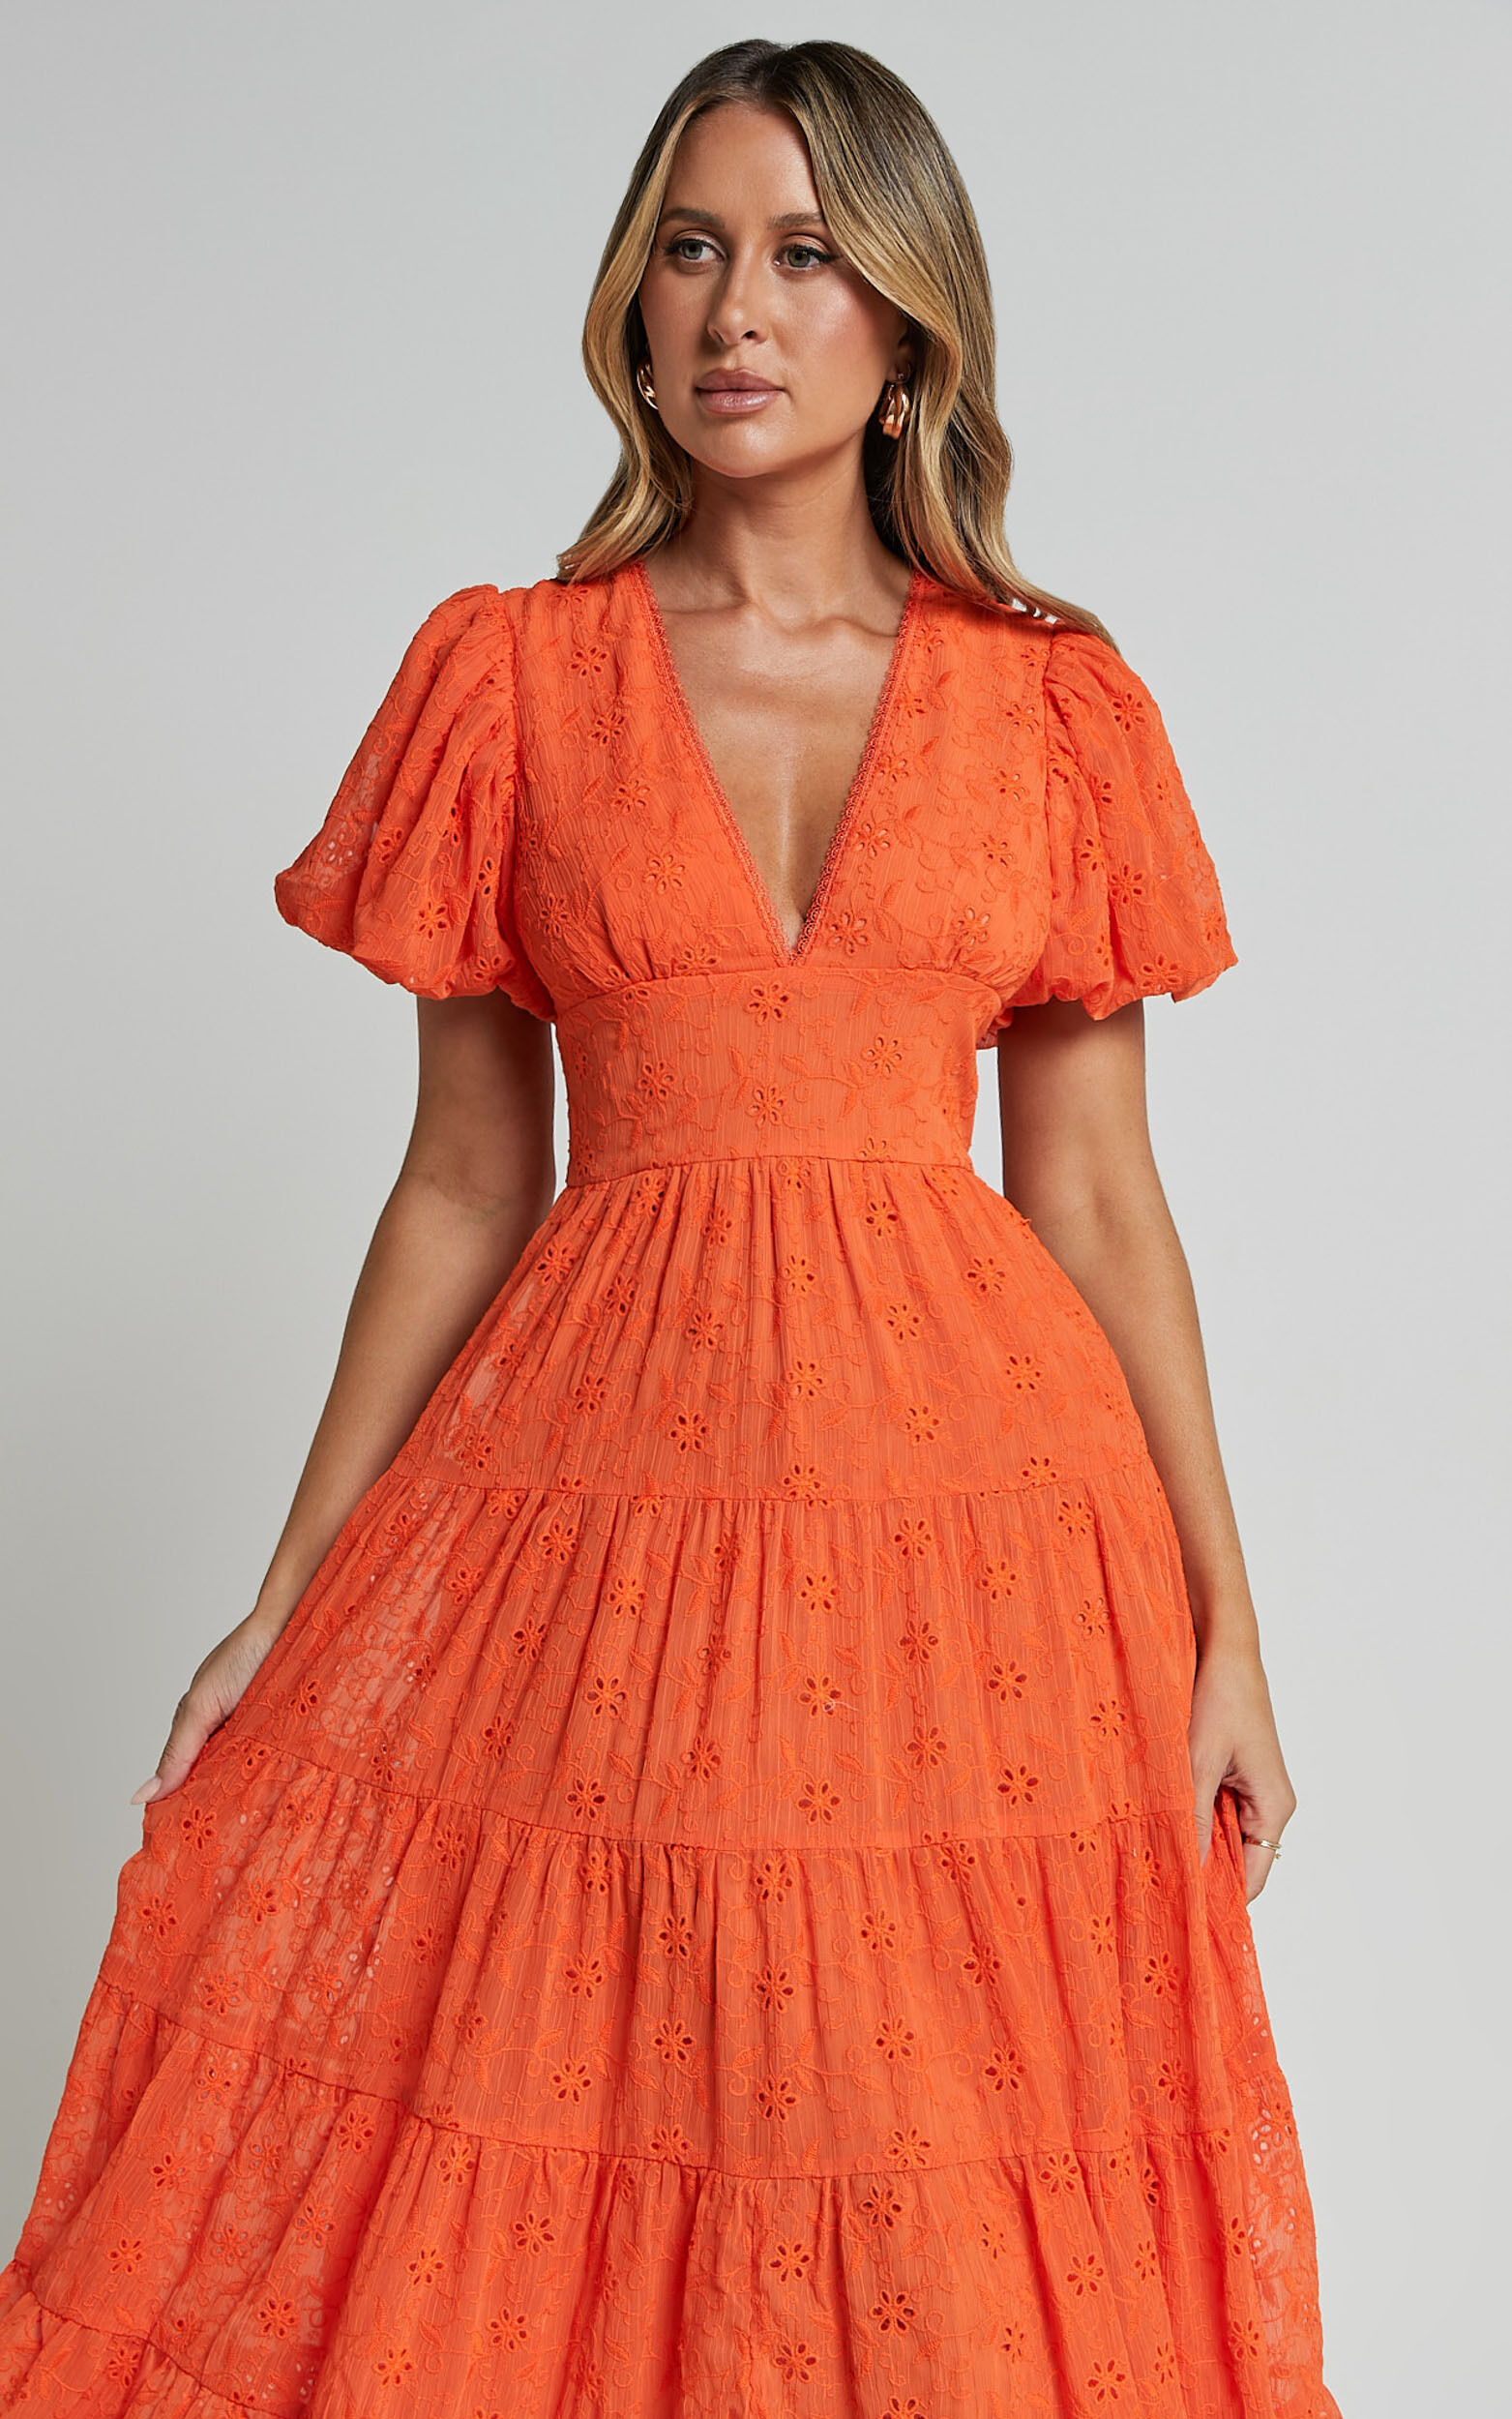 Circolo 1901 long-sleeve midi dress - Orange